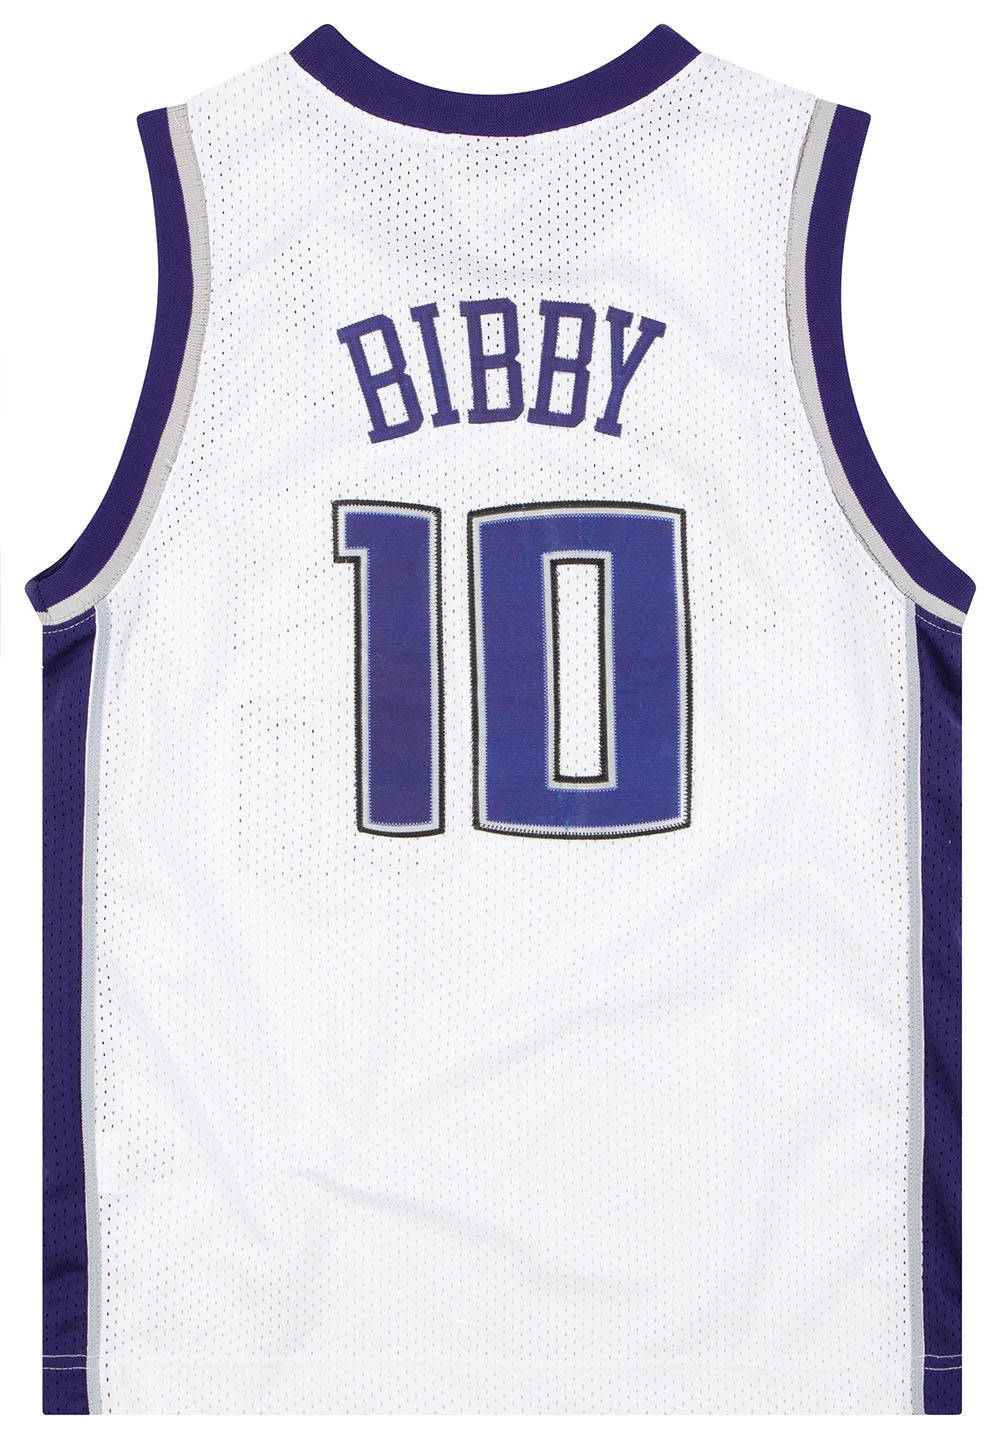 NEW Nike Mike Bibby Sacramento Kings Swingman Hardwood Classic NBA Jersey L  +2